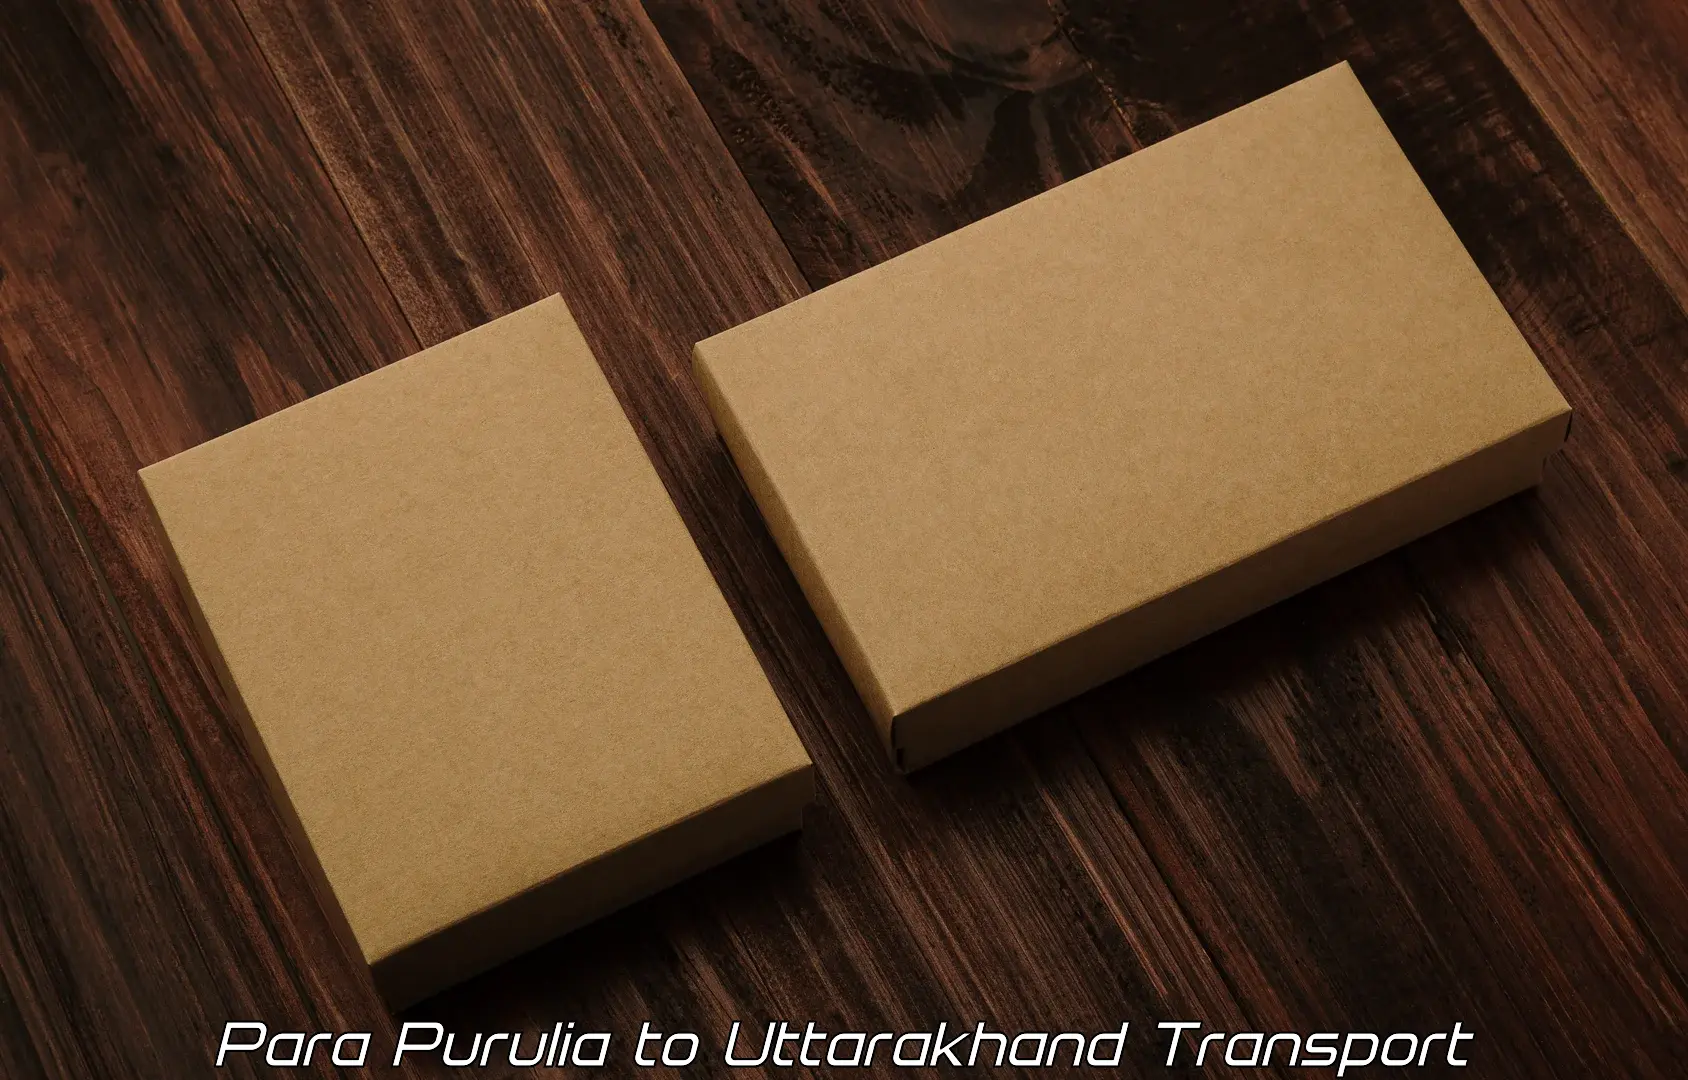 Commercial transport service Para Purulia to Uttarakhand